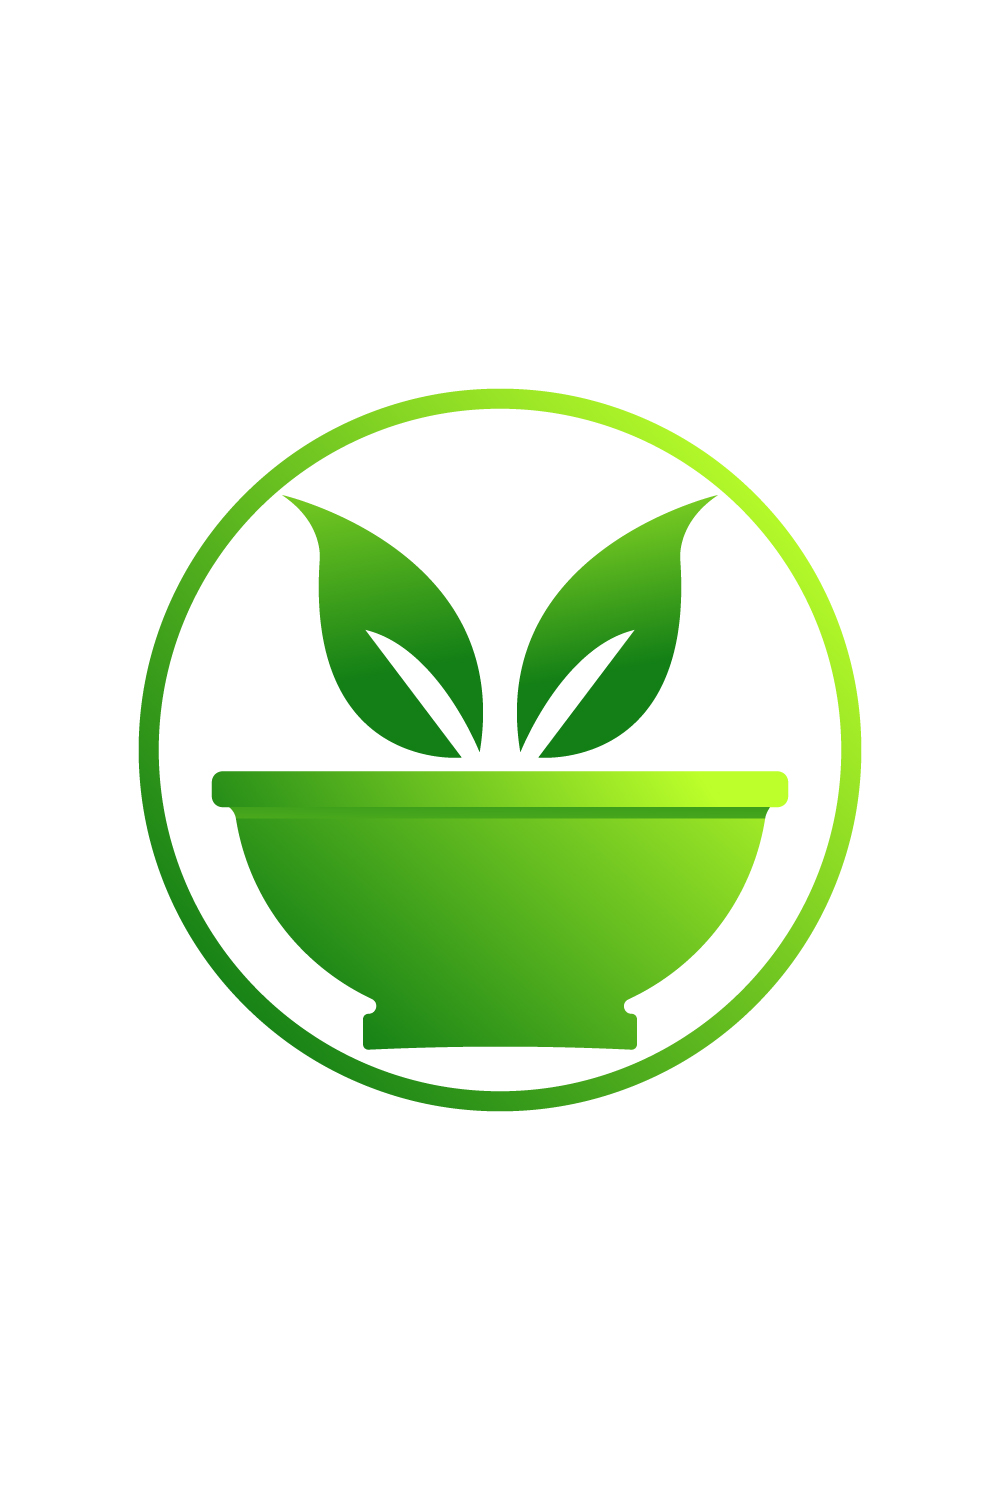 Green Herbal logo design vector images Green tree logo best icon Green Vegetable logo design template icon Vegan food, healthy soup Vector logo best monogram identity pinterest preview image.